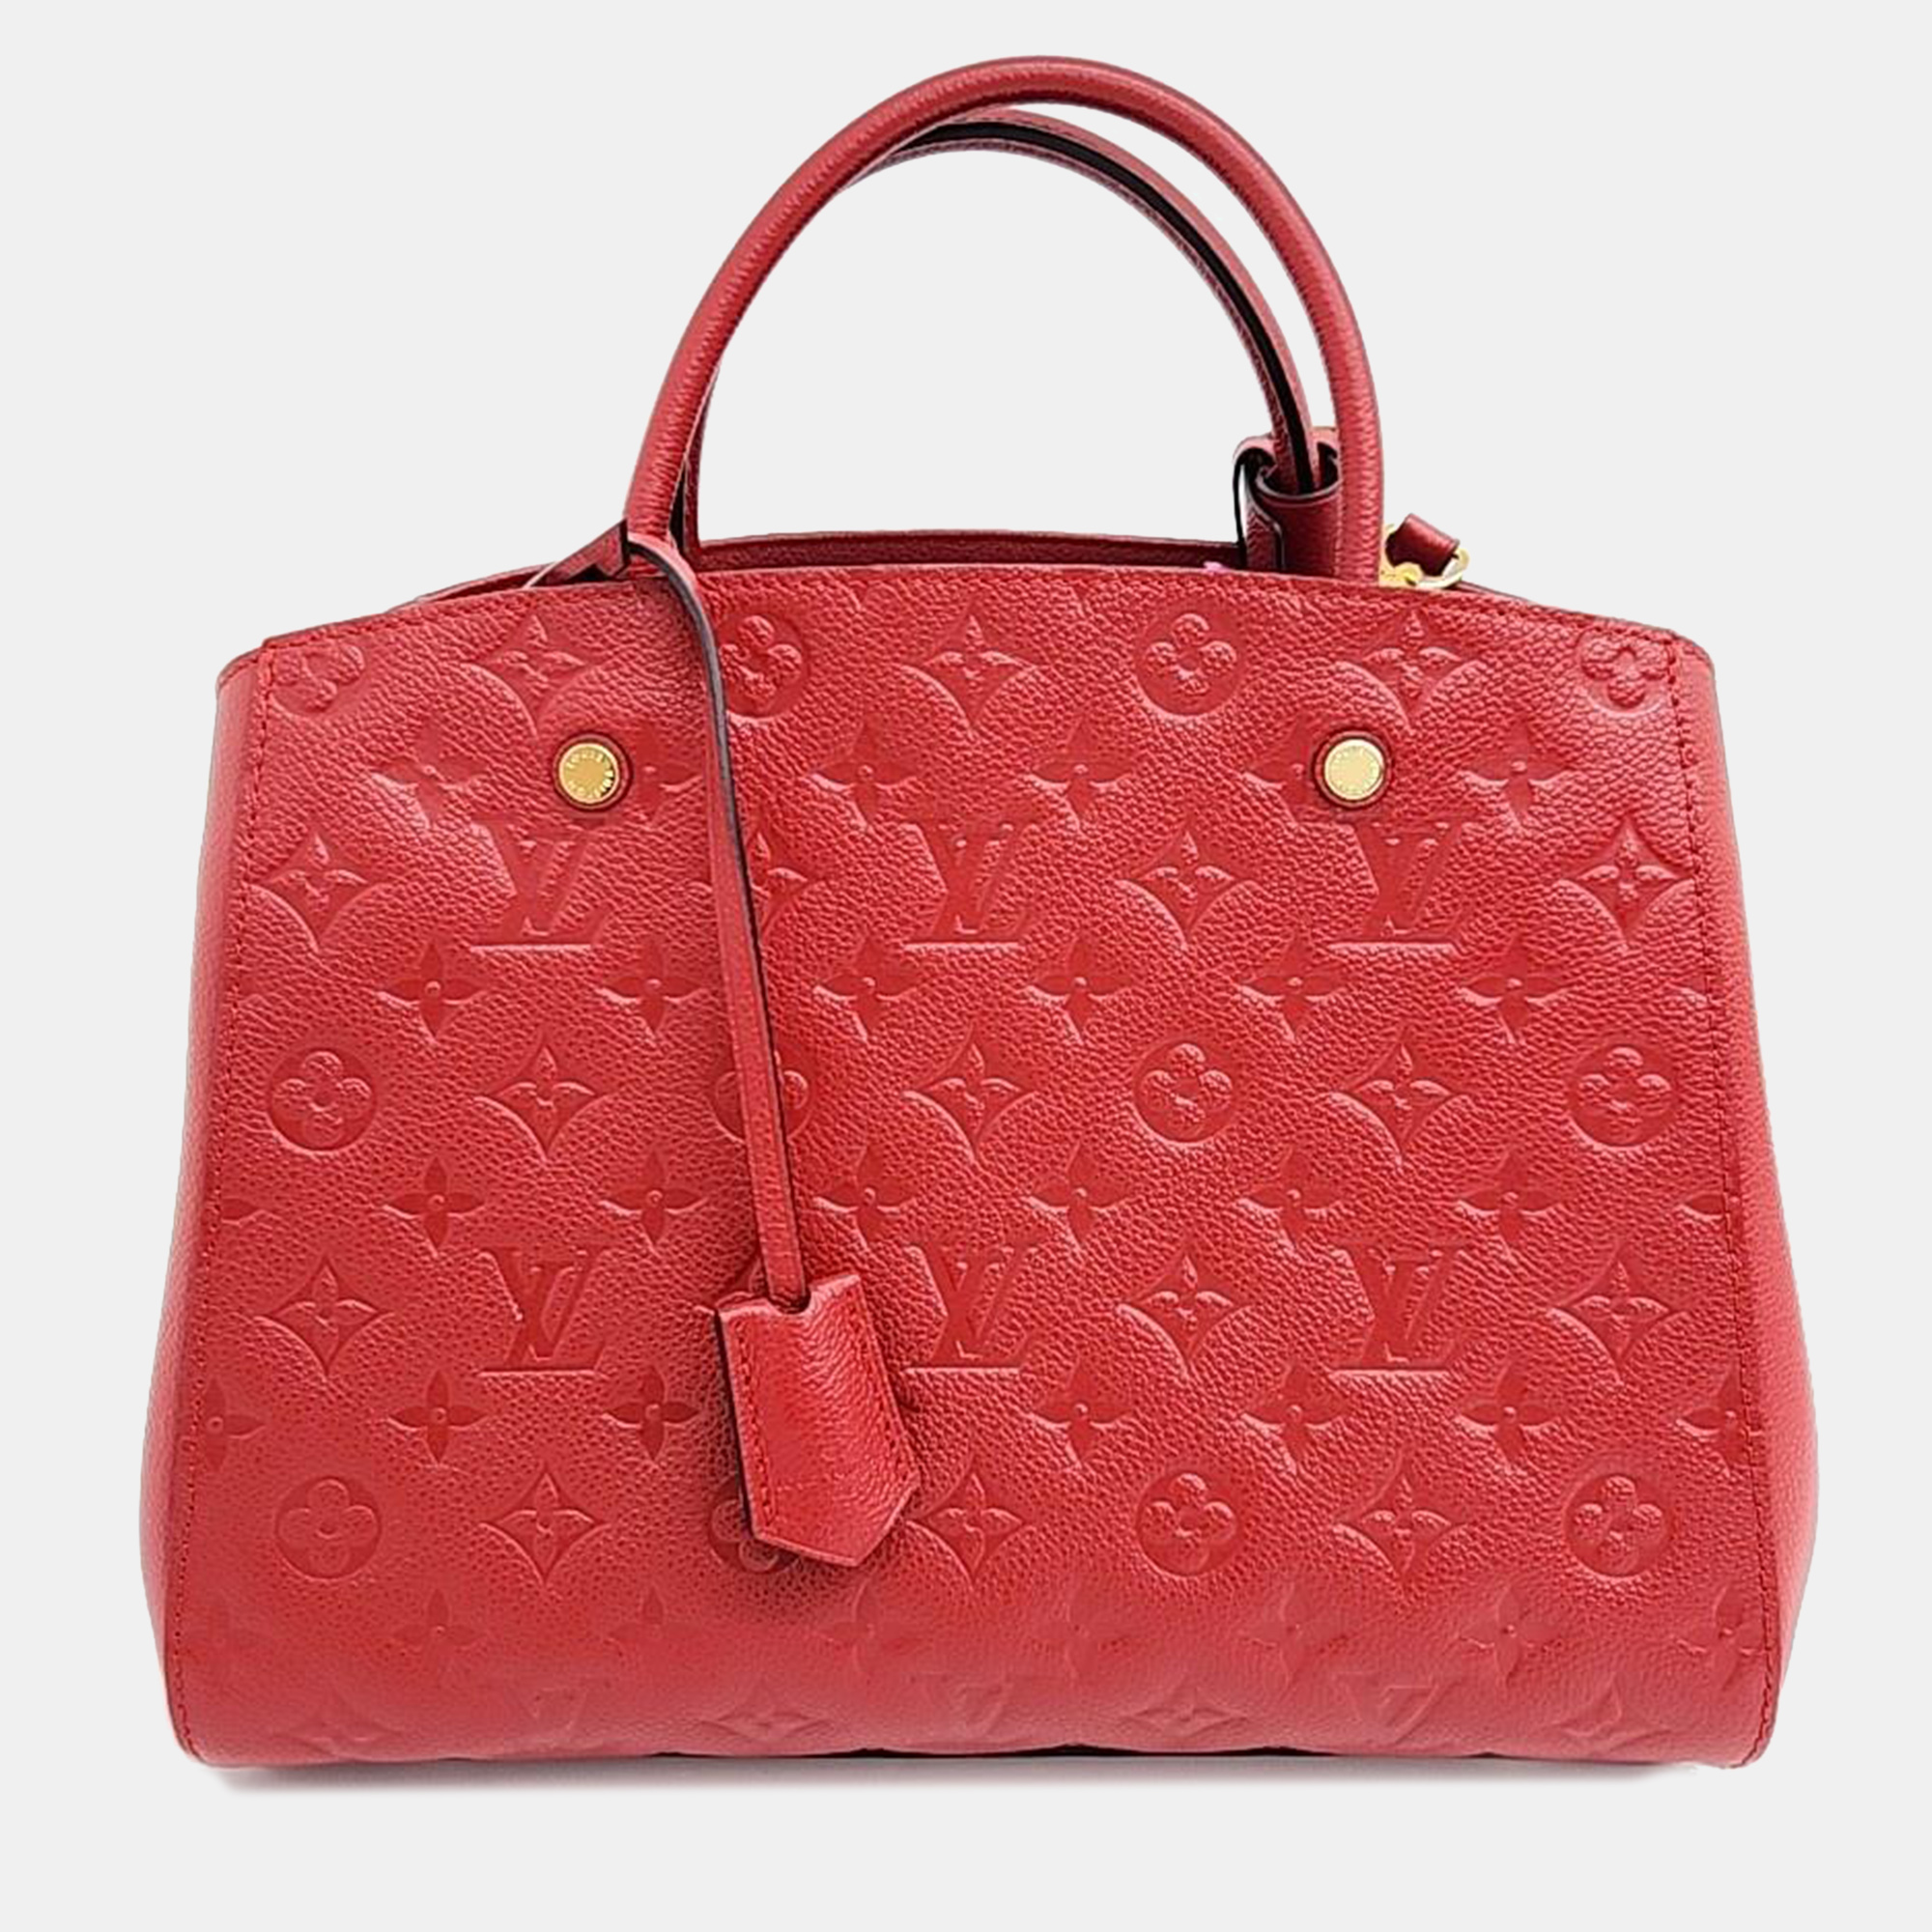 Louis vuitton red monogram empriente leather montaigne mm tote bag